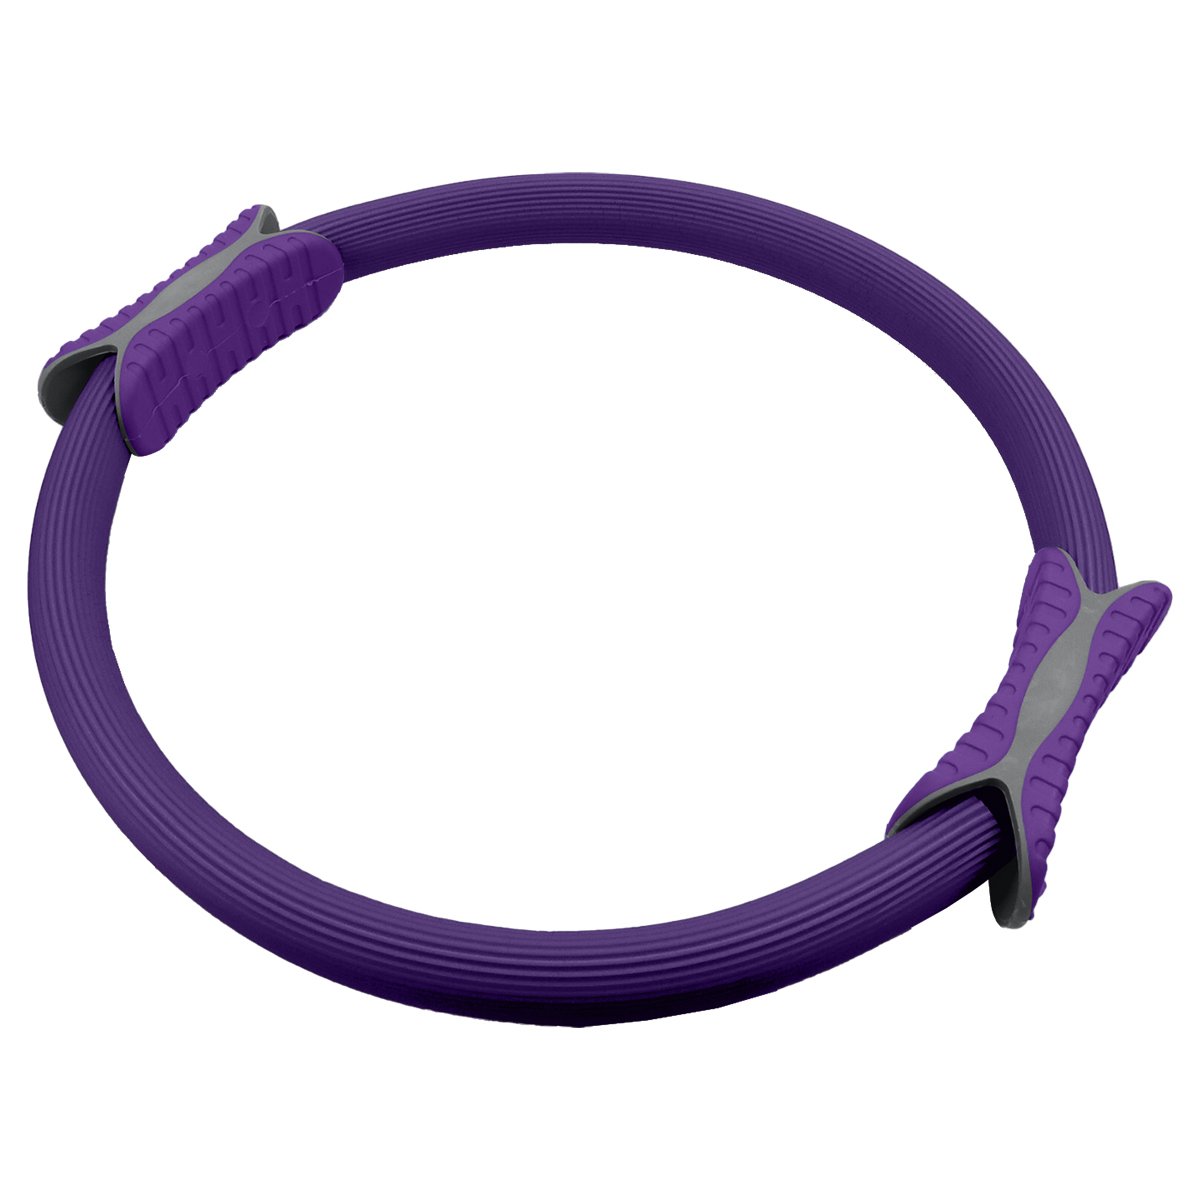 Powertrain Pilates Ring Band Yoga Home Workout Exercise Band Purple 1